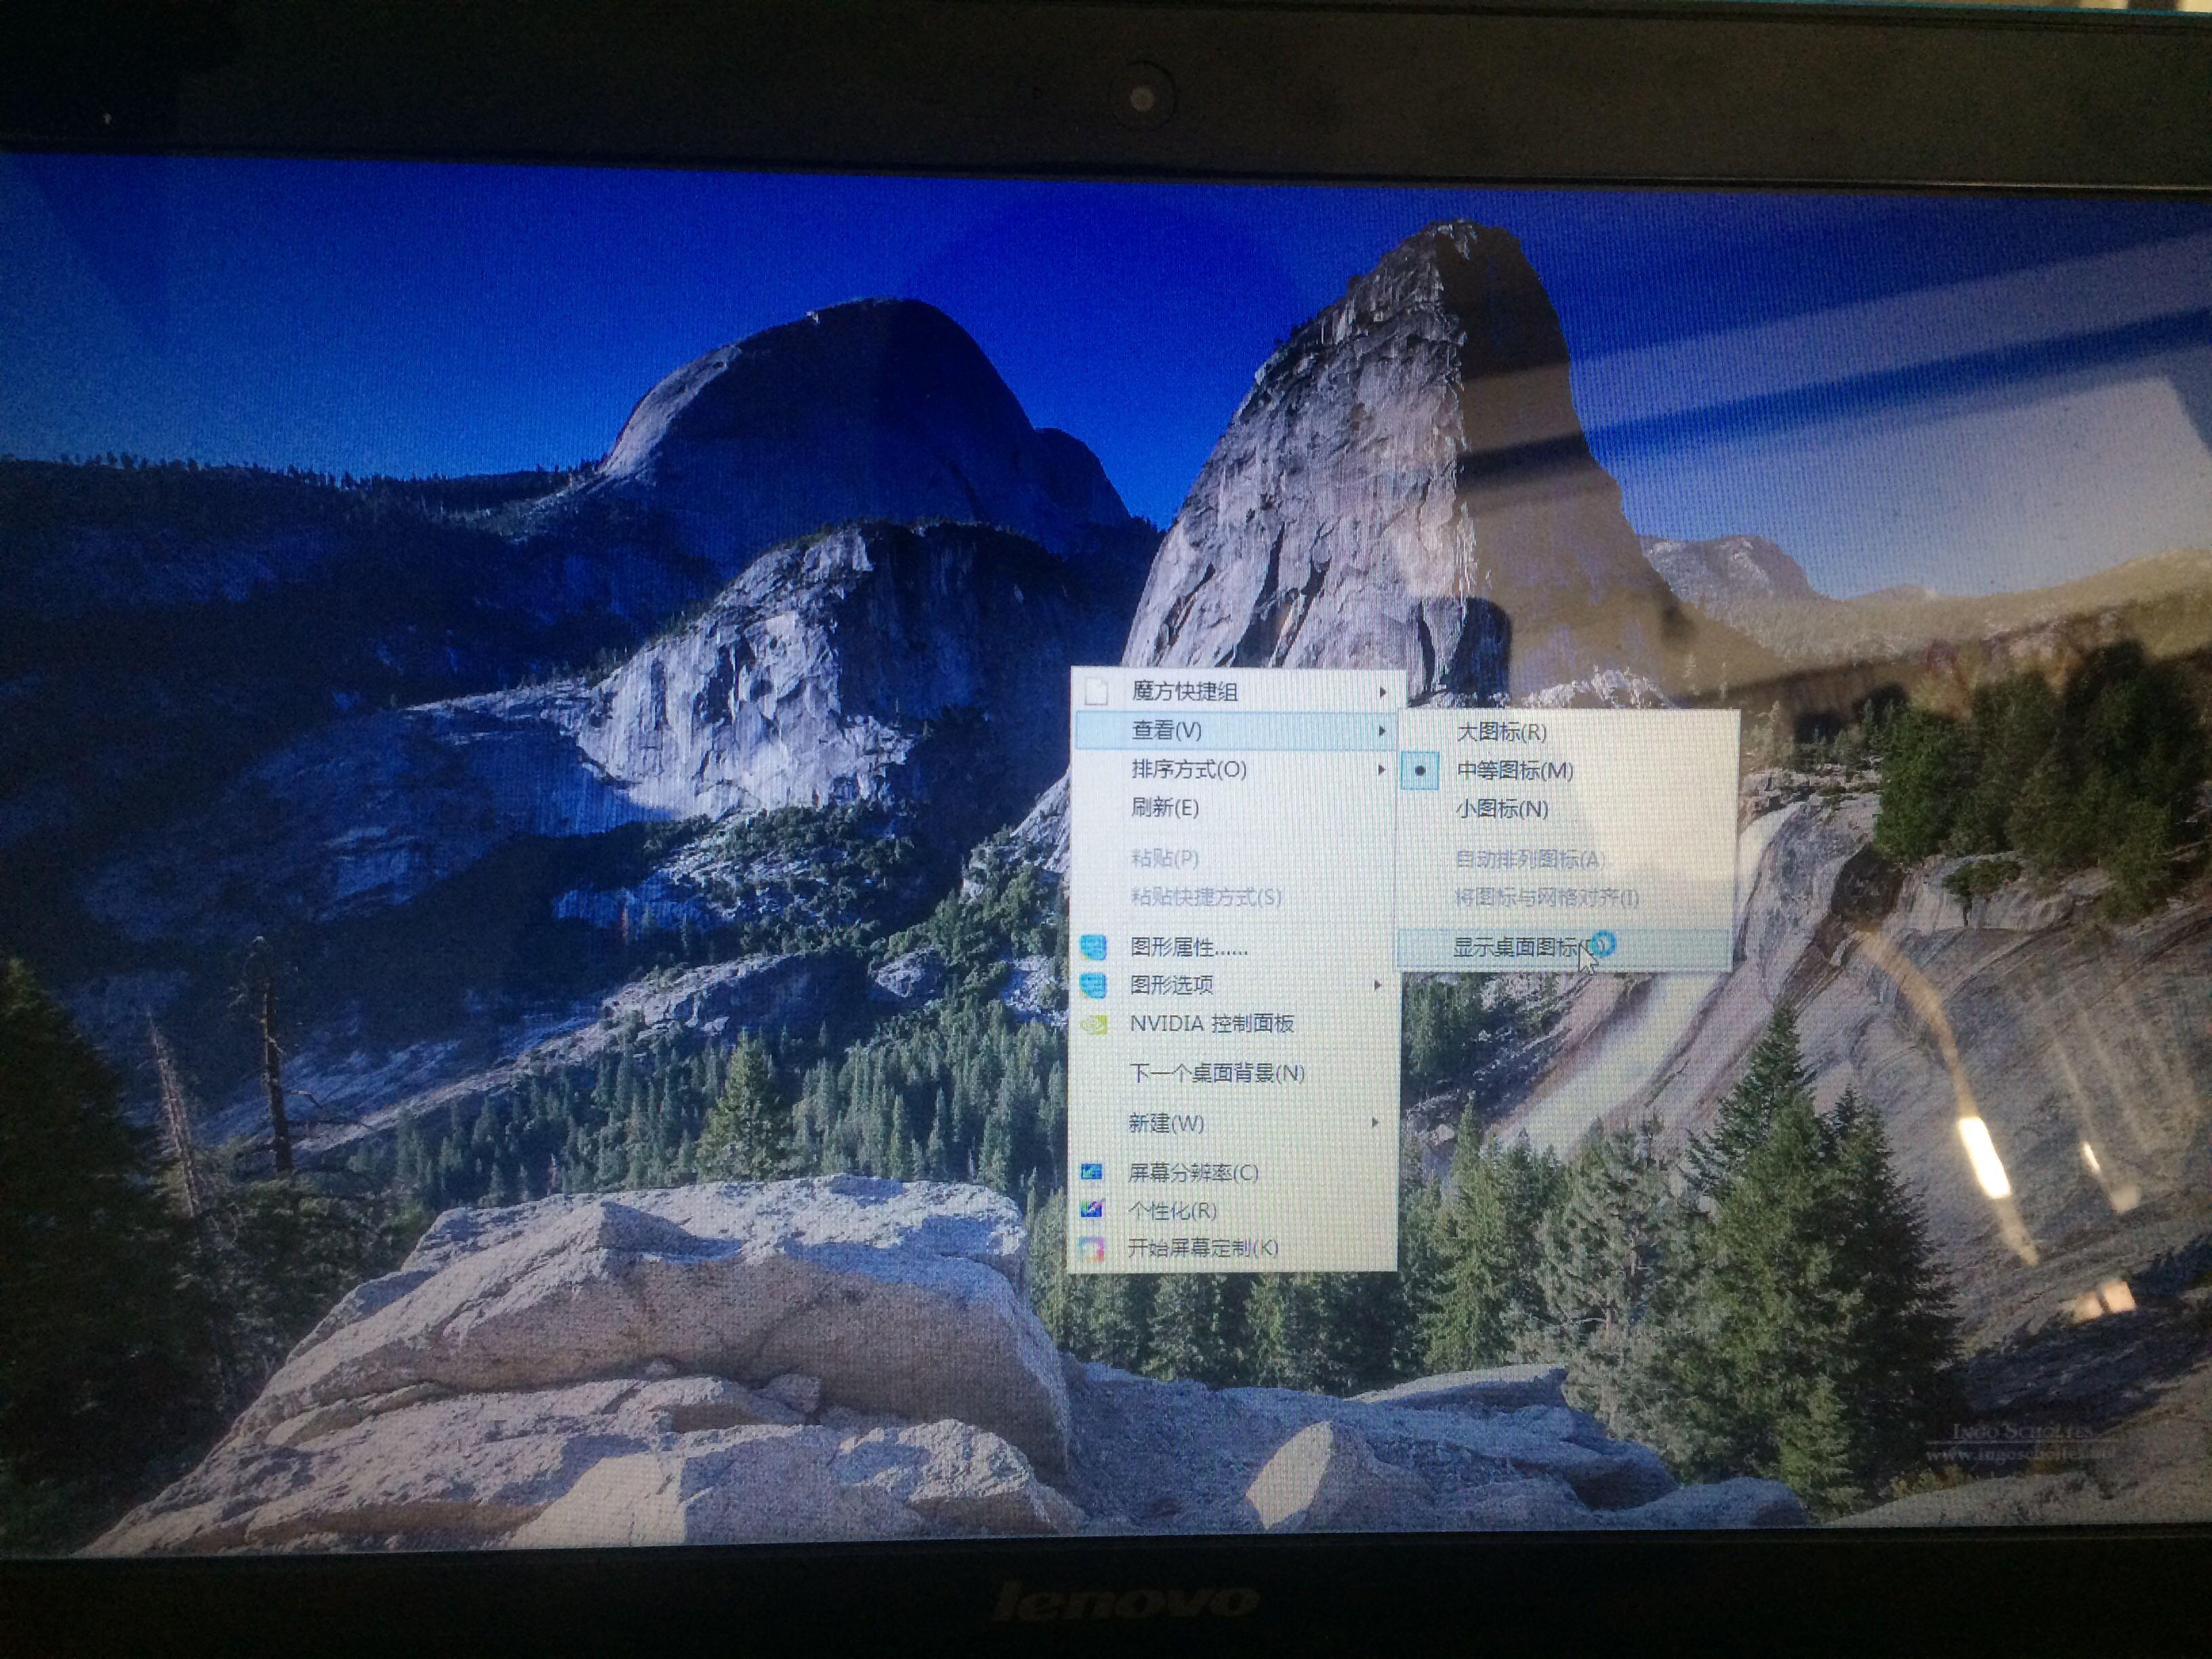 Windows8桌面图标隐藏与显示,有没有快捷键或